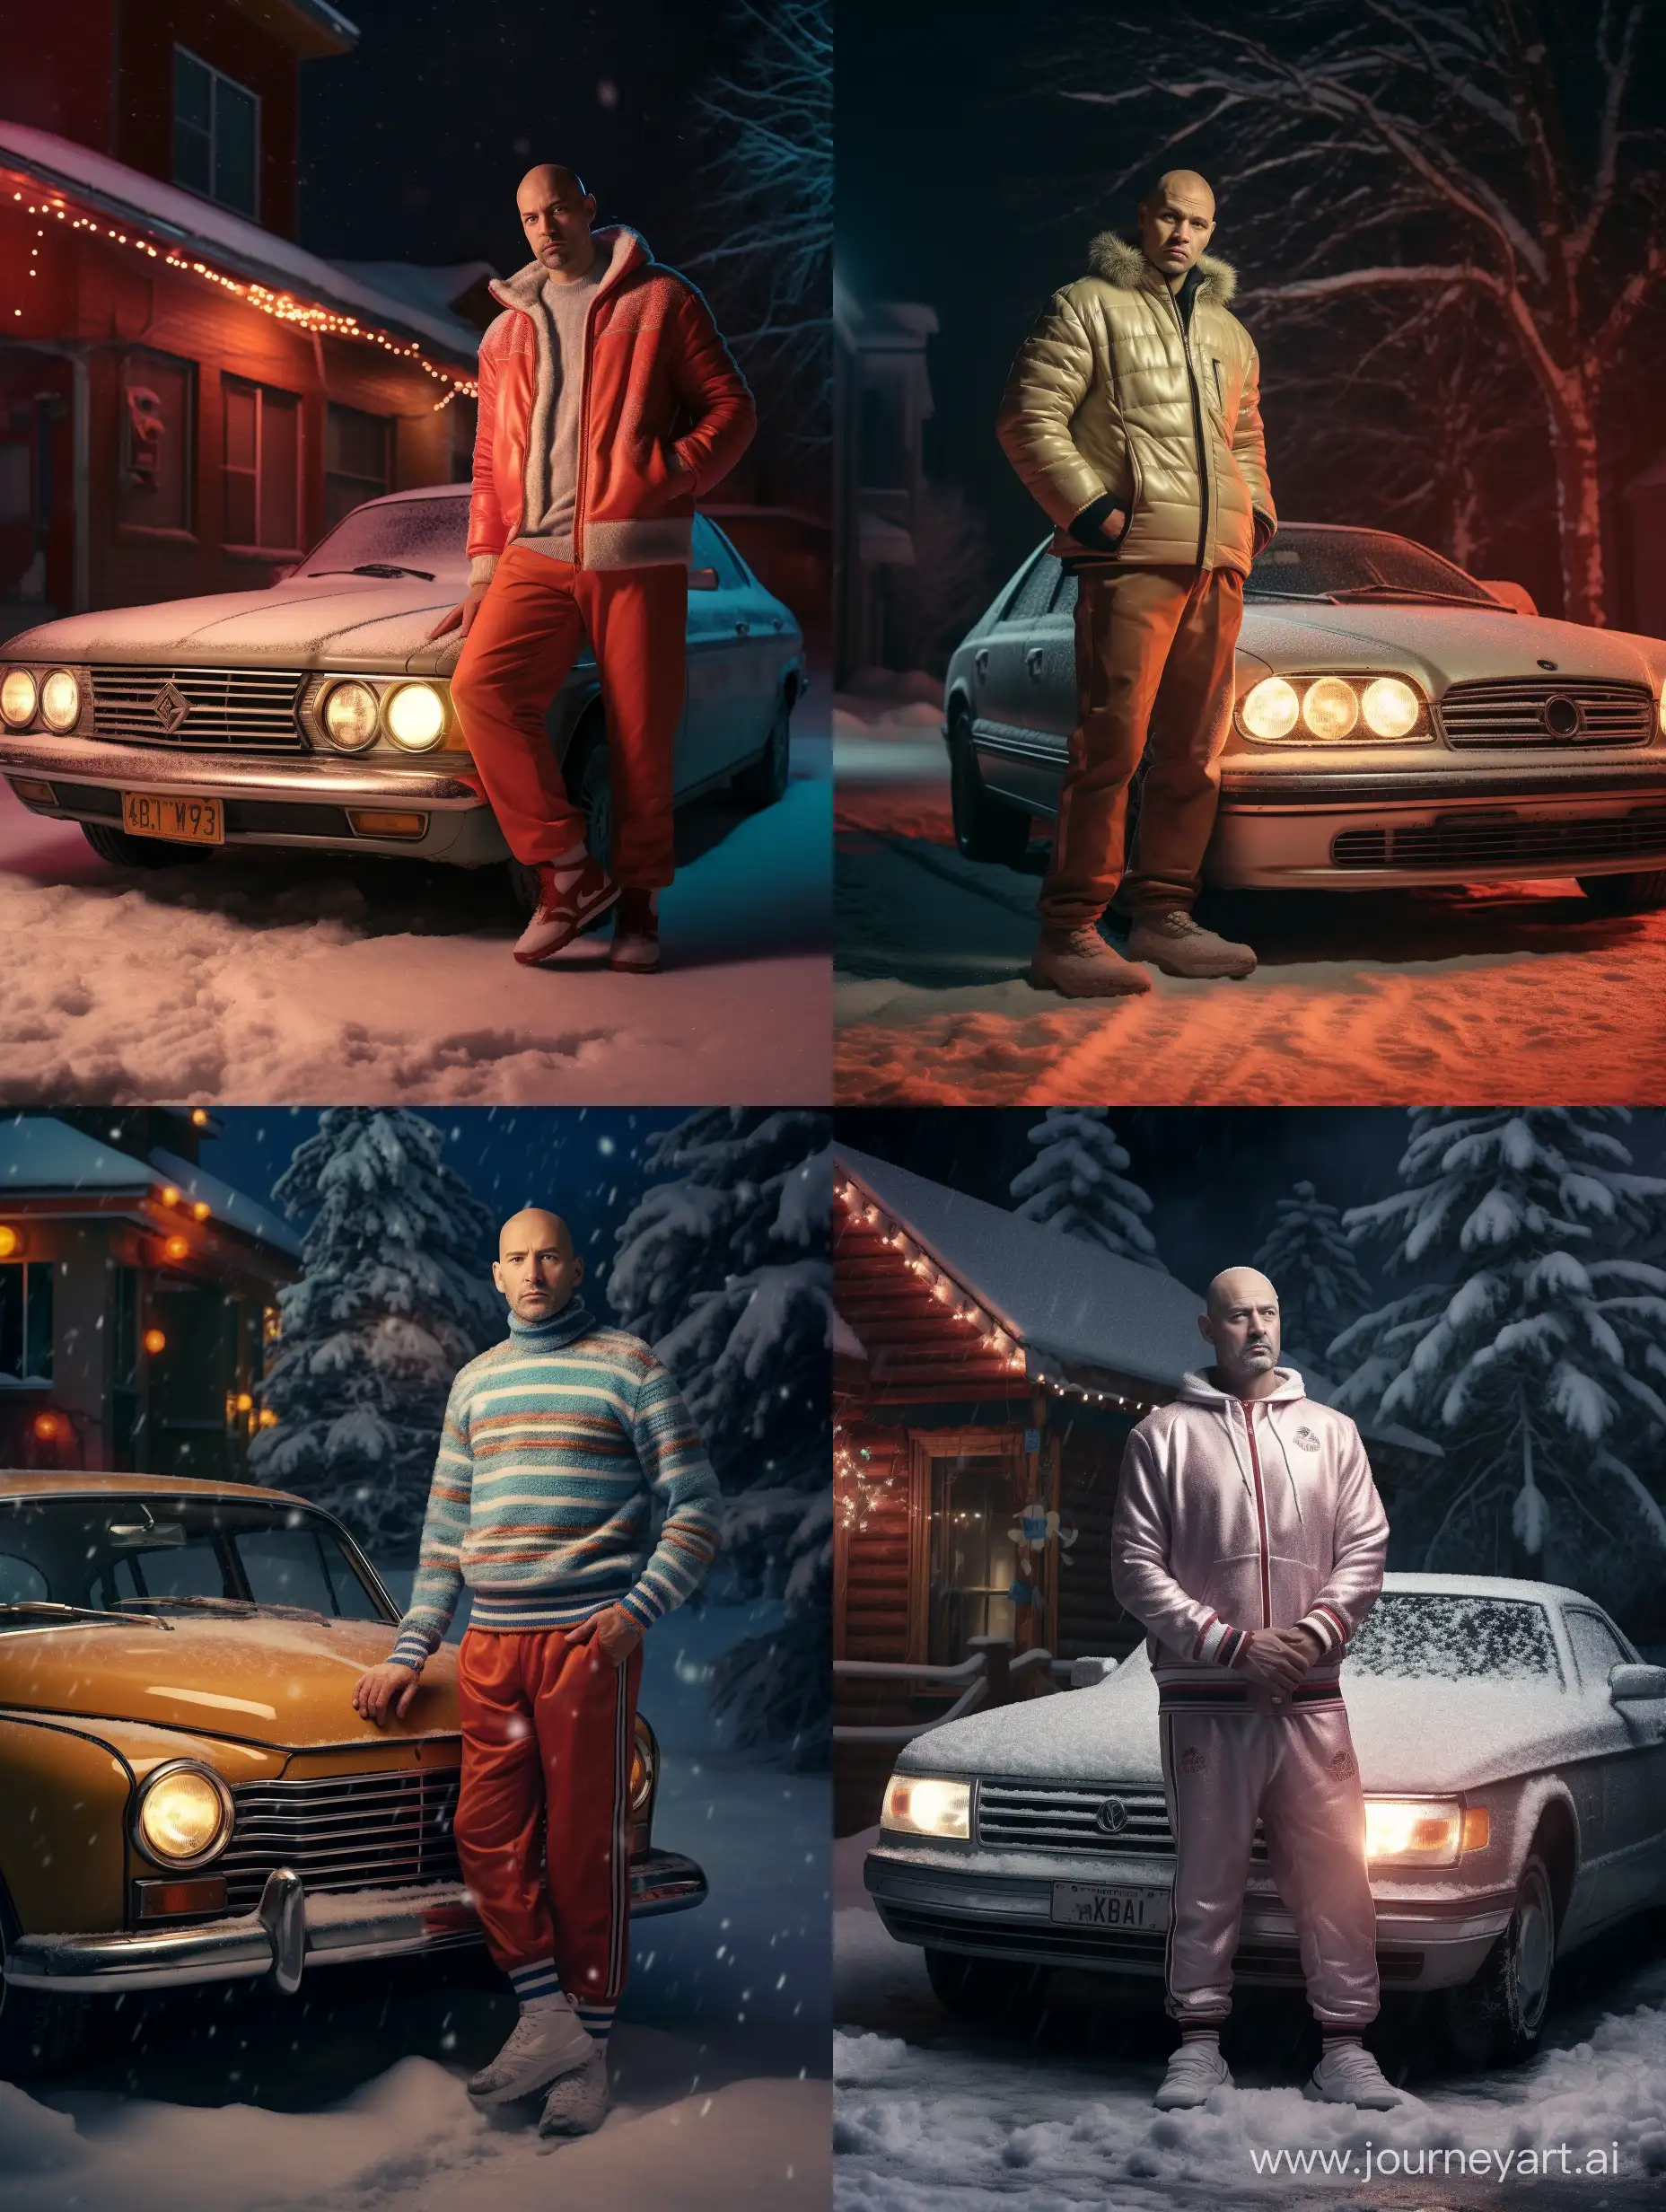 Vintage-USSR-Winter-Night-Bald-Man-in-Adidas-Clothing-with-Retro-Volga-Car